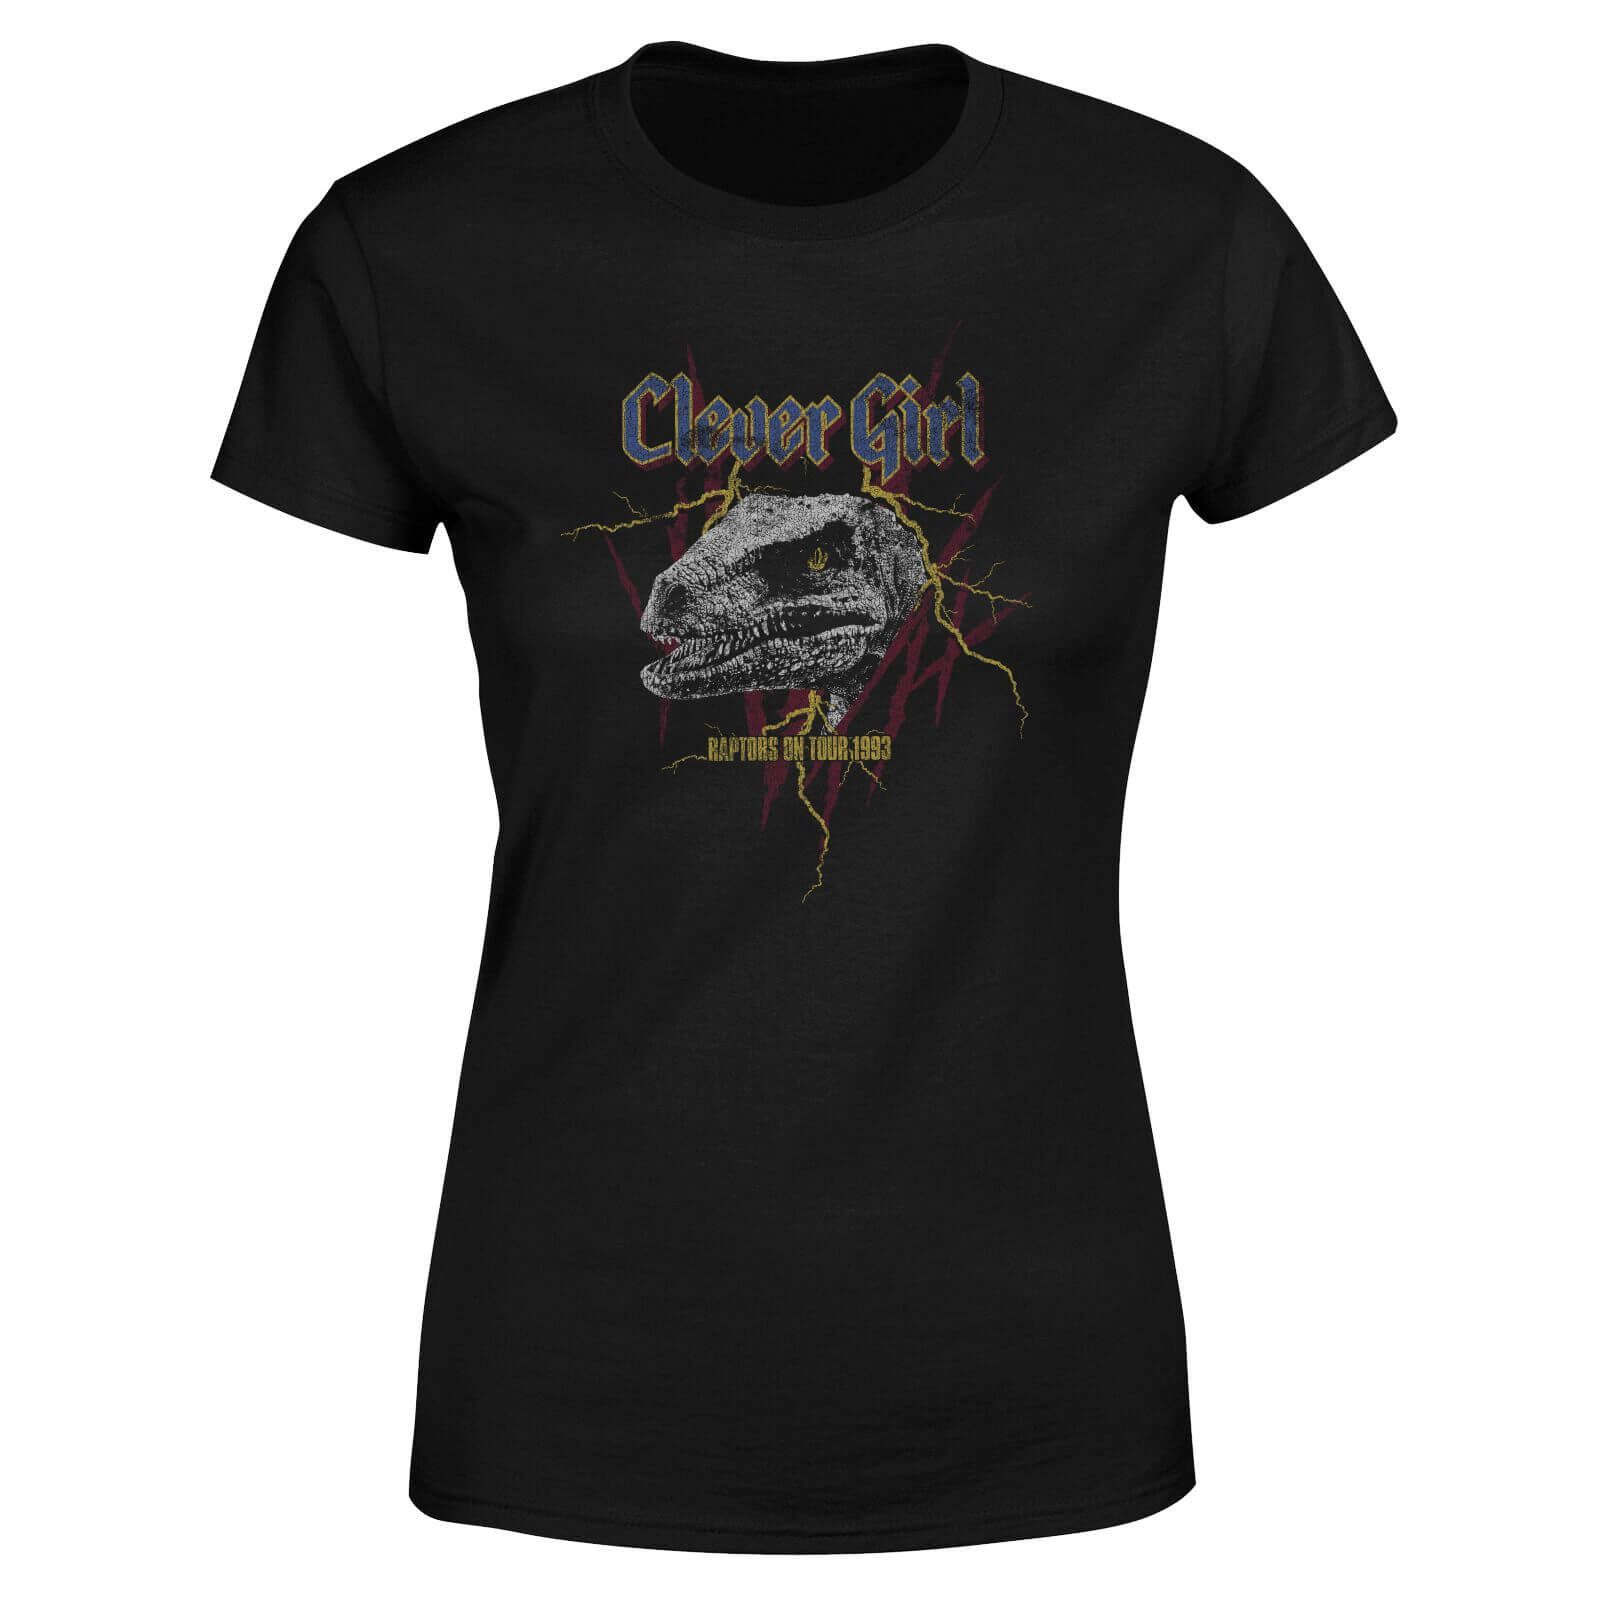 Jurassic Park Clever Girl Raptors On Tour Women's T-Shirt - Black - M